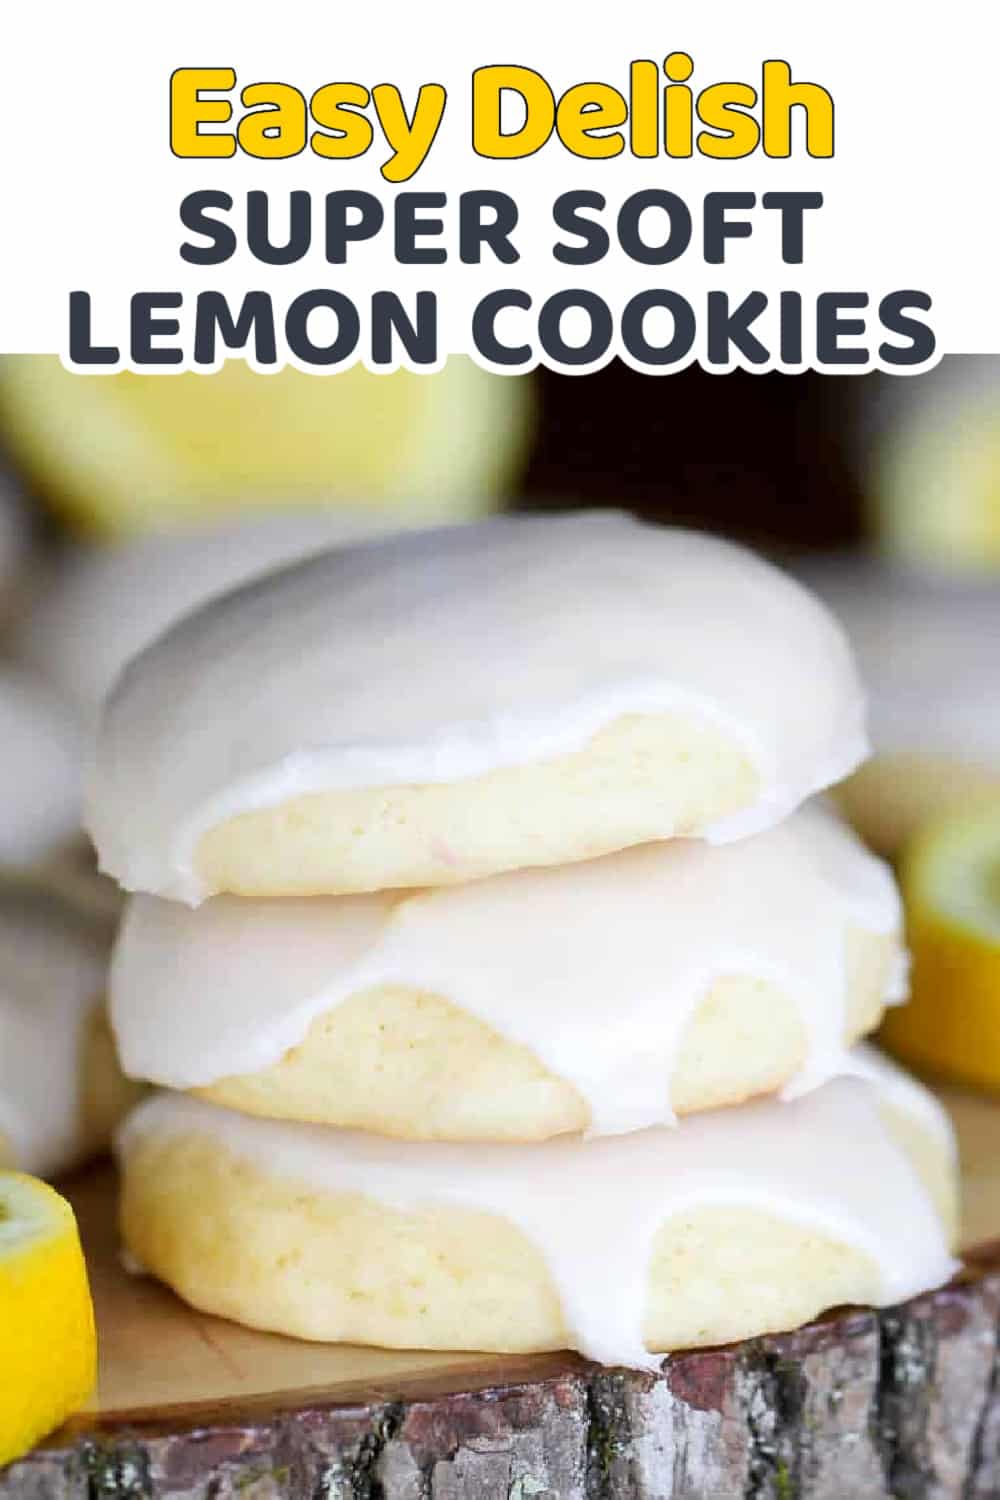 Super Soft Lemon Glazed Cookies recipe